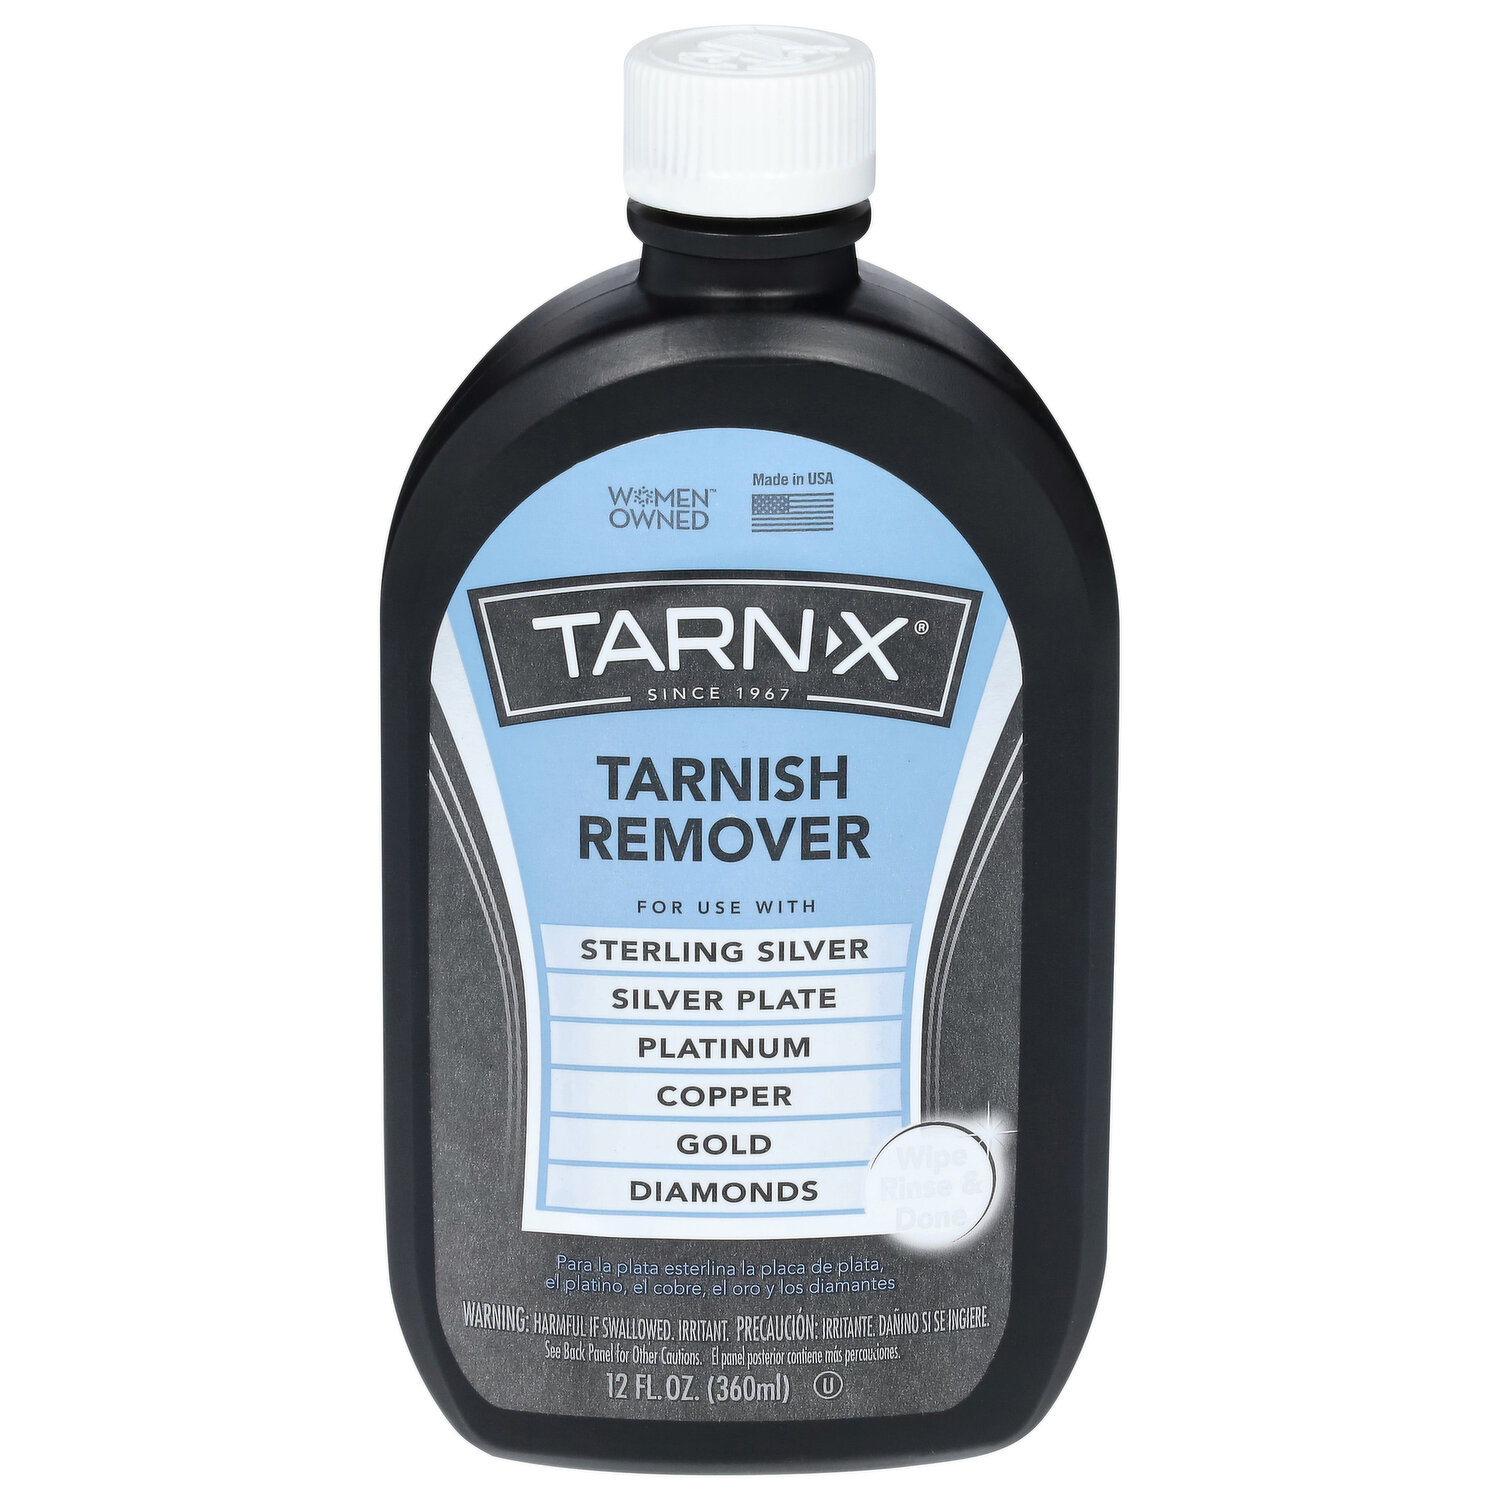 Tarn-x Tarnish Remover Provides Time-Saving Shine